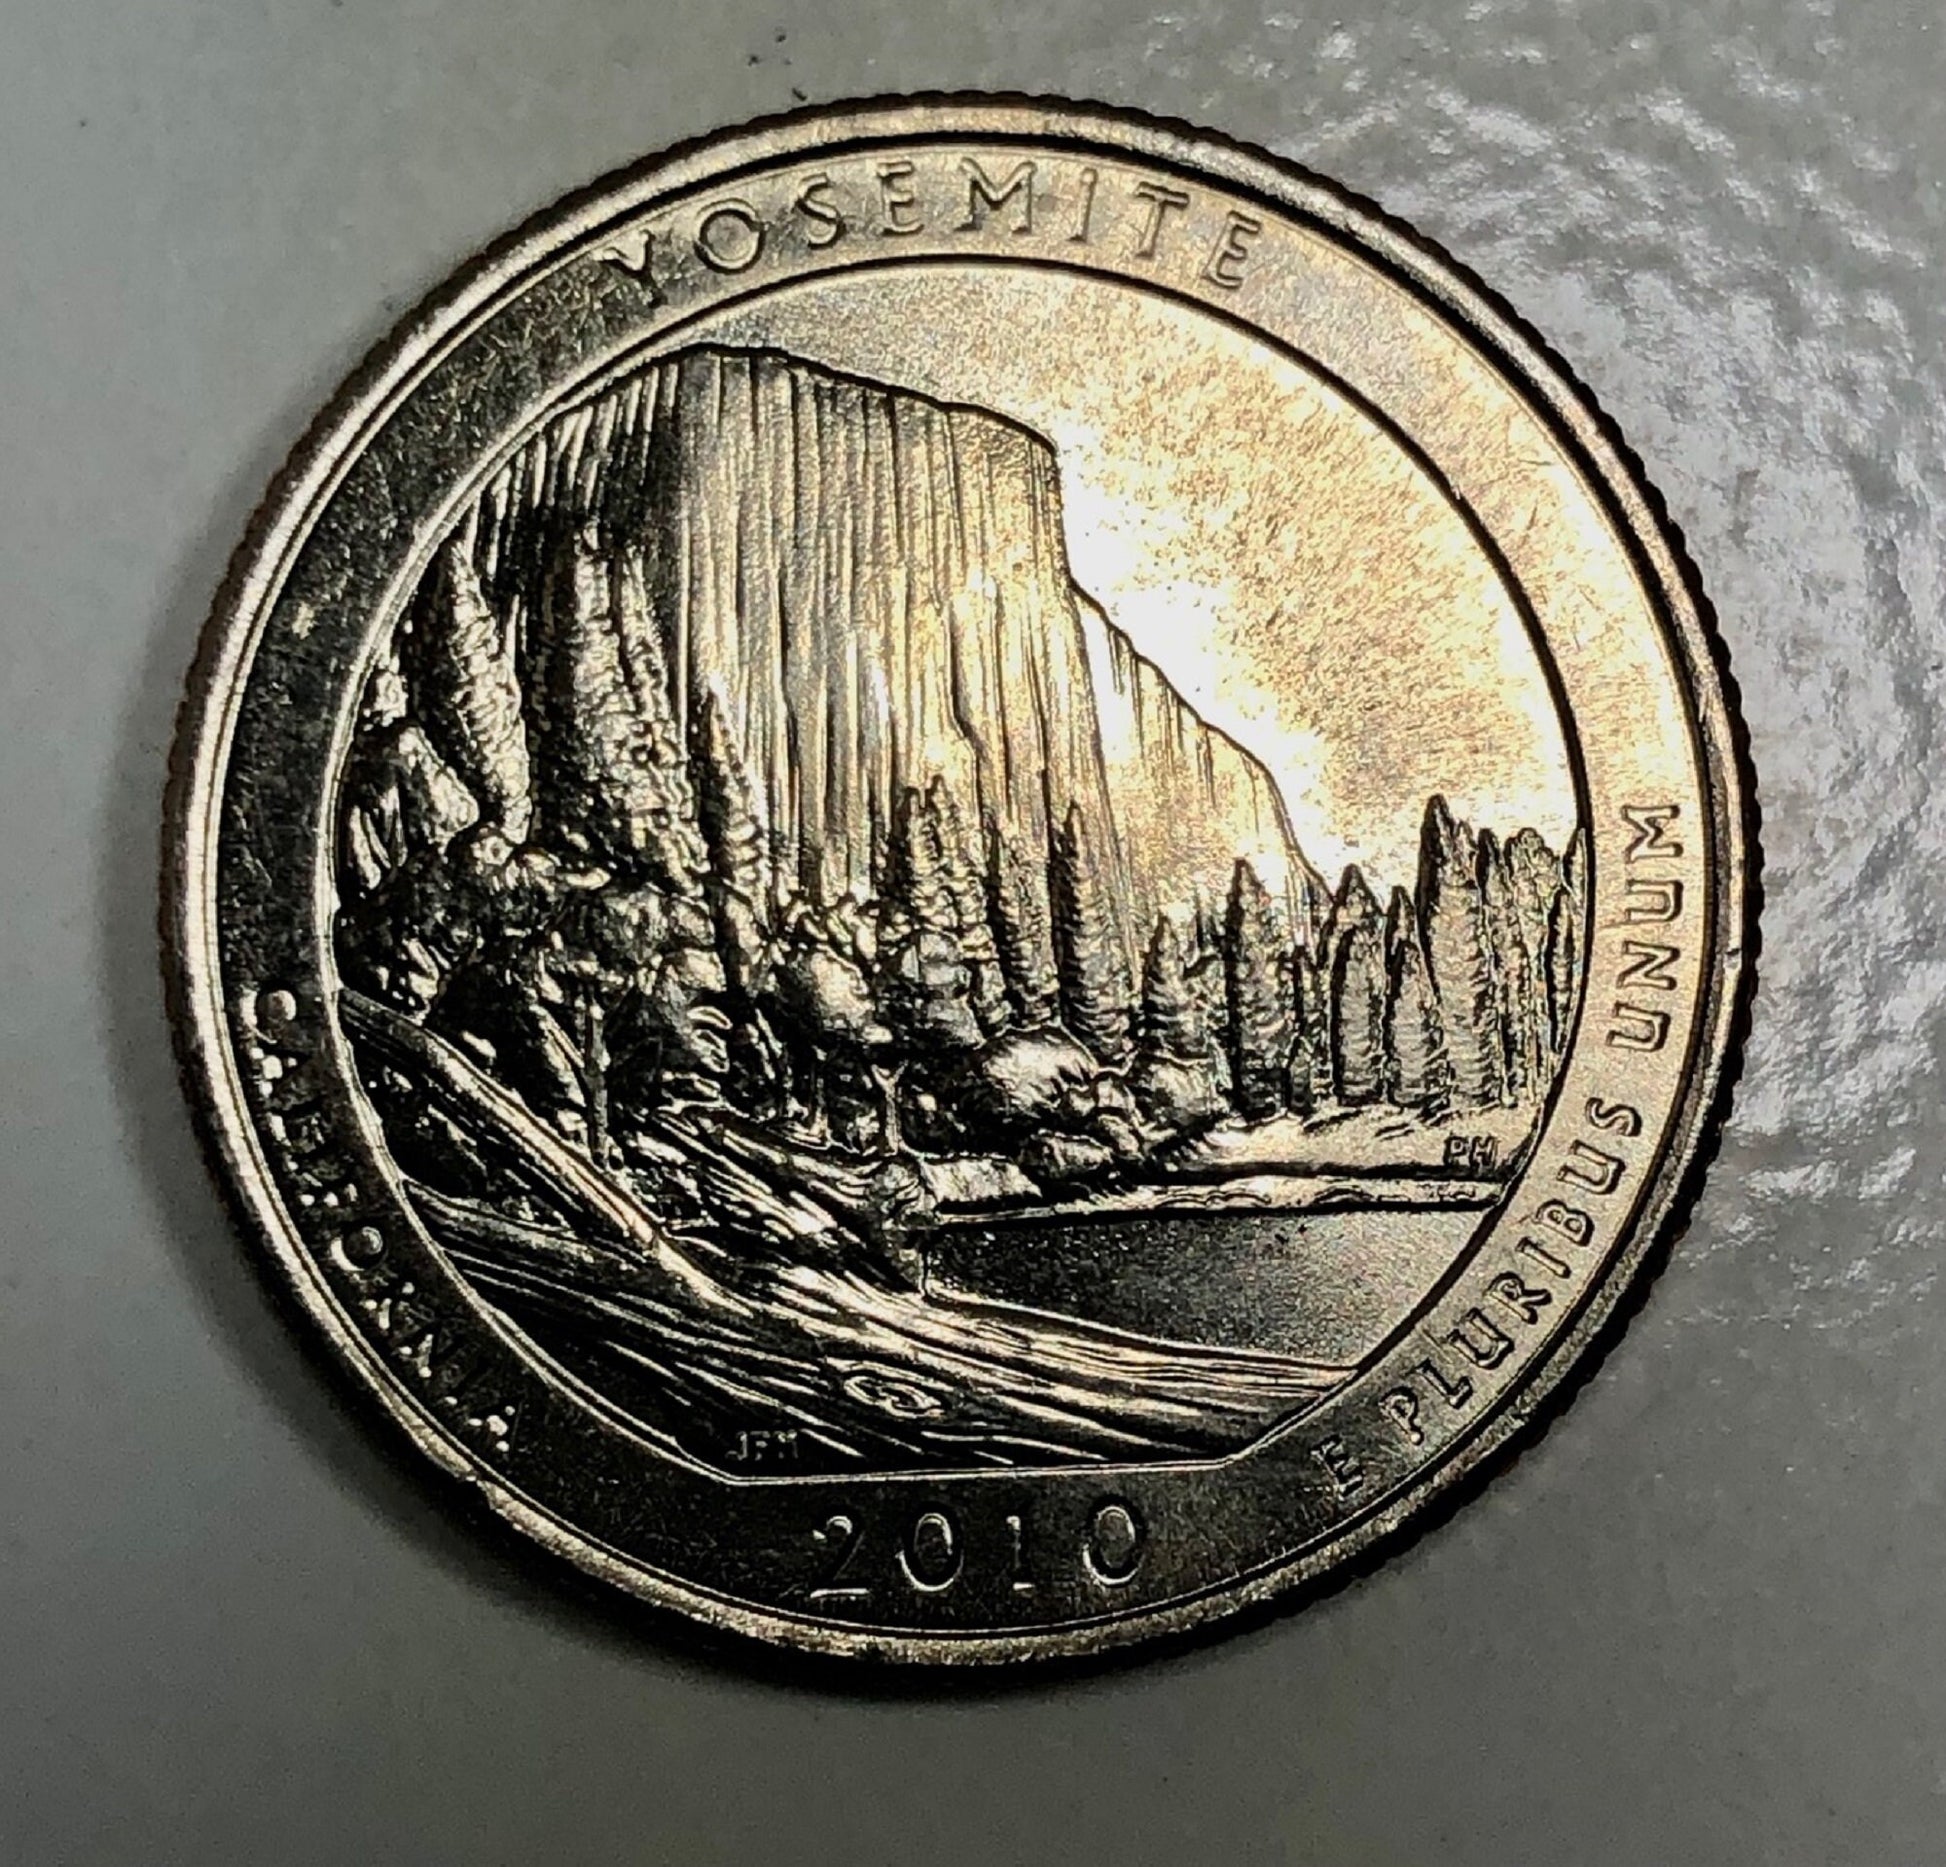 USA Ring California Yosemite National Park Quarter Coin Ring